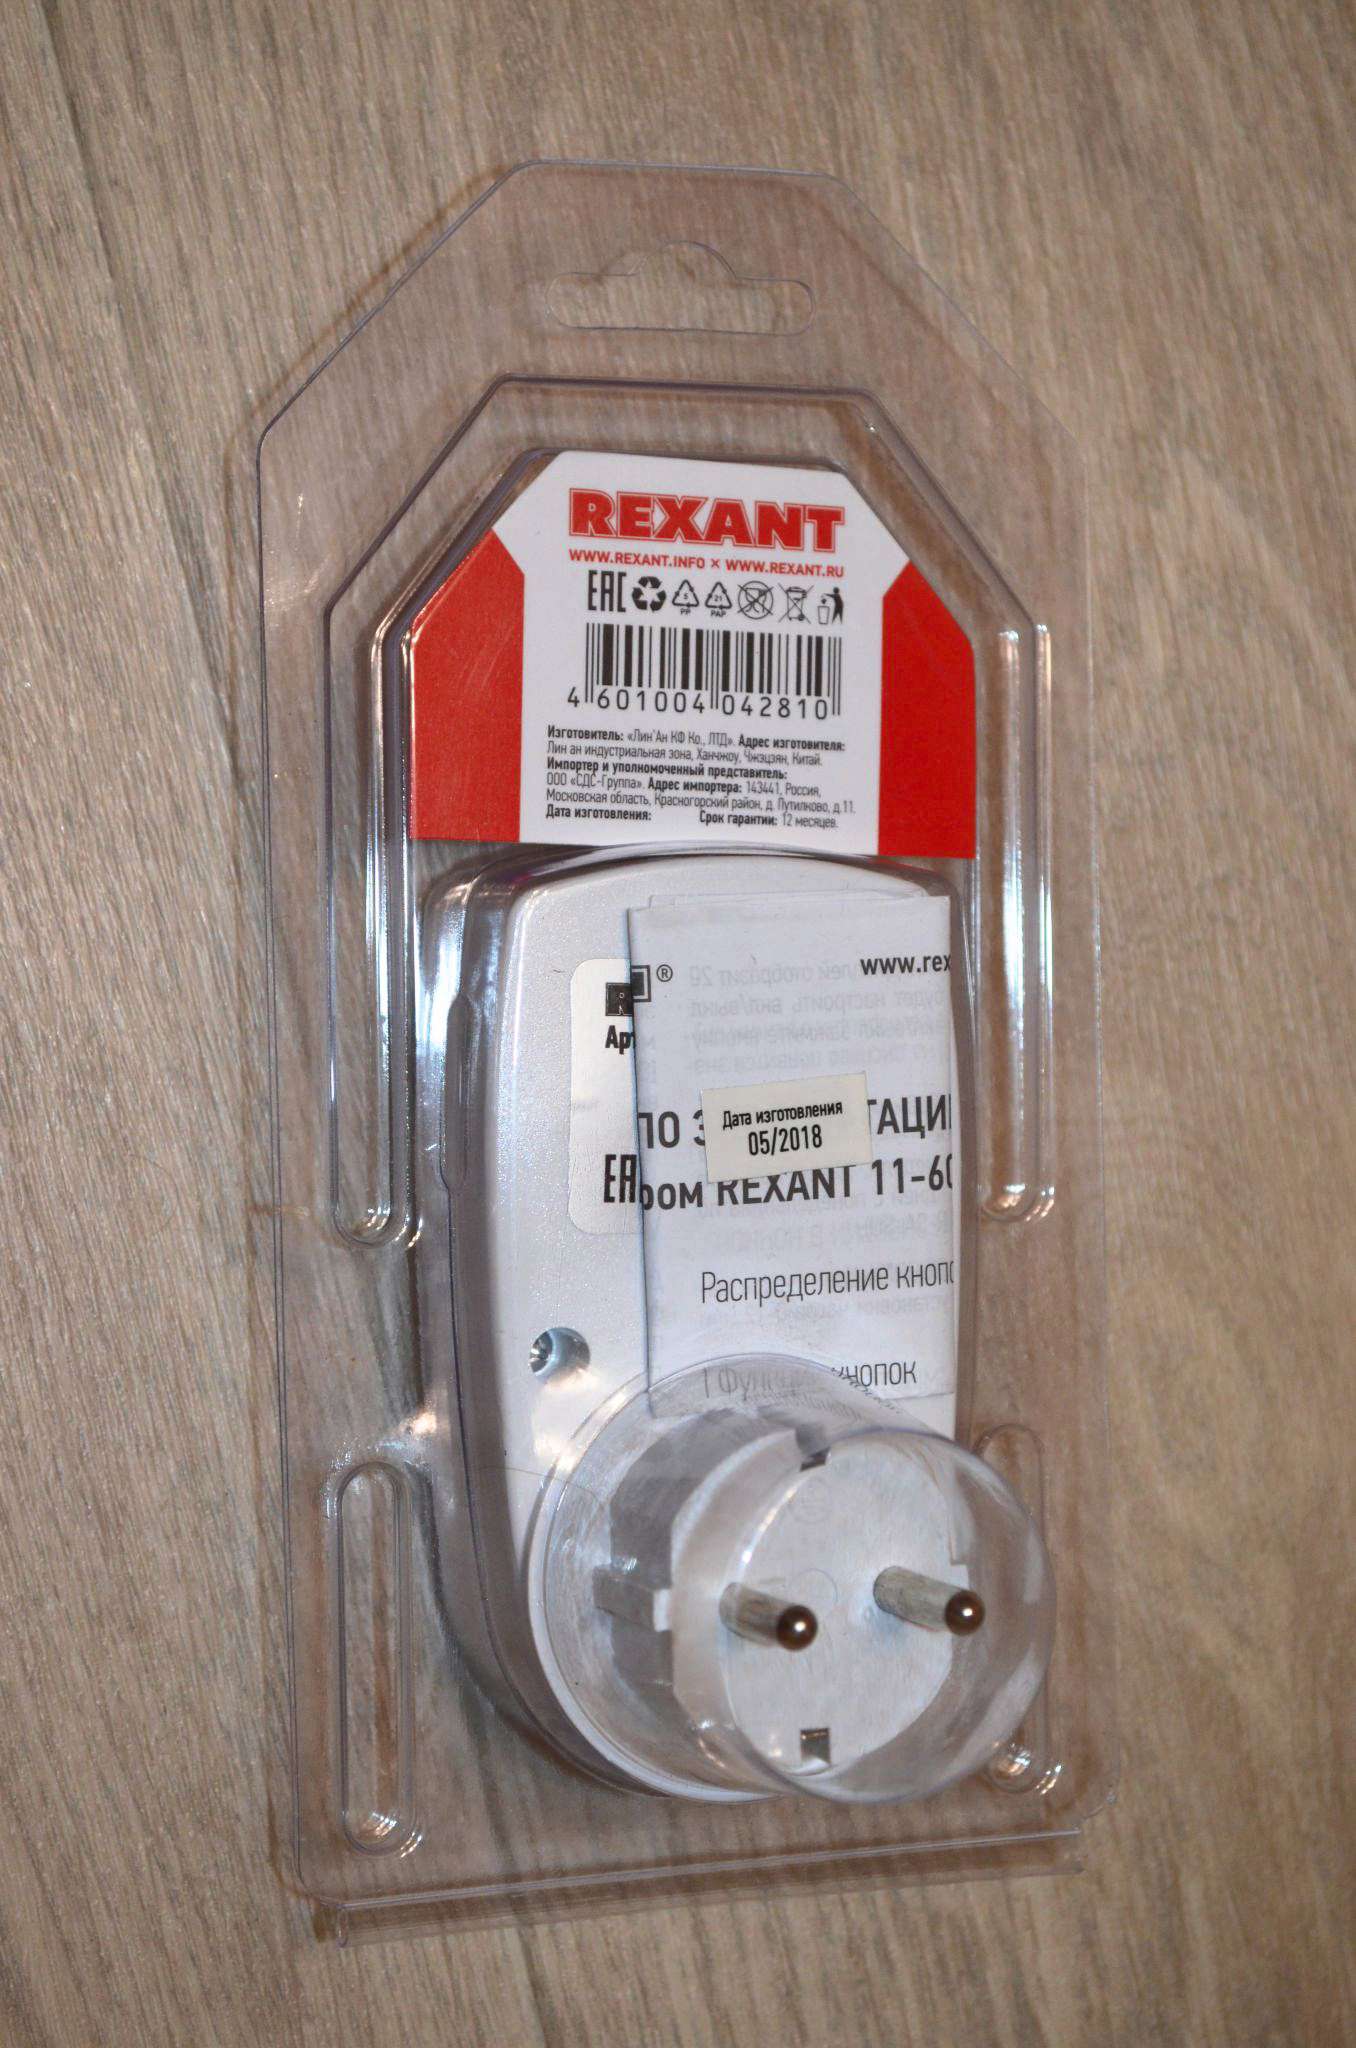 Таймер rexant. Розетка с электронным таймером Rexant RX-31а 11-6010. Таймер розеточный Rexant RX-31a. Розетка Rexant RX - 31а. Розетка с электронным таймером Rexant RX - 31а.